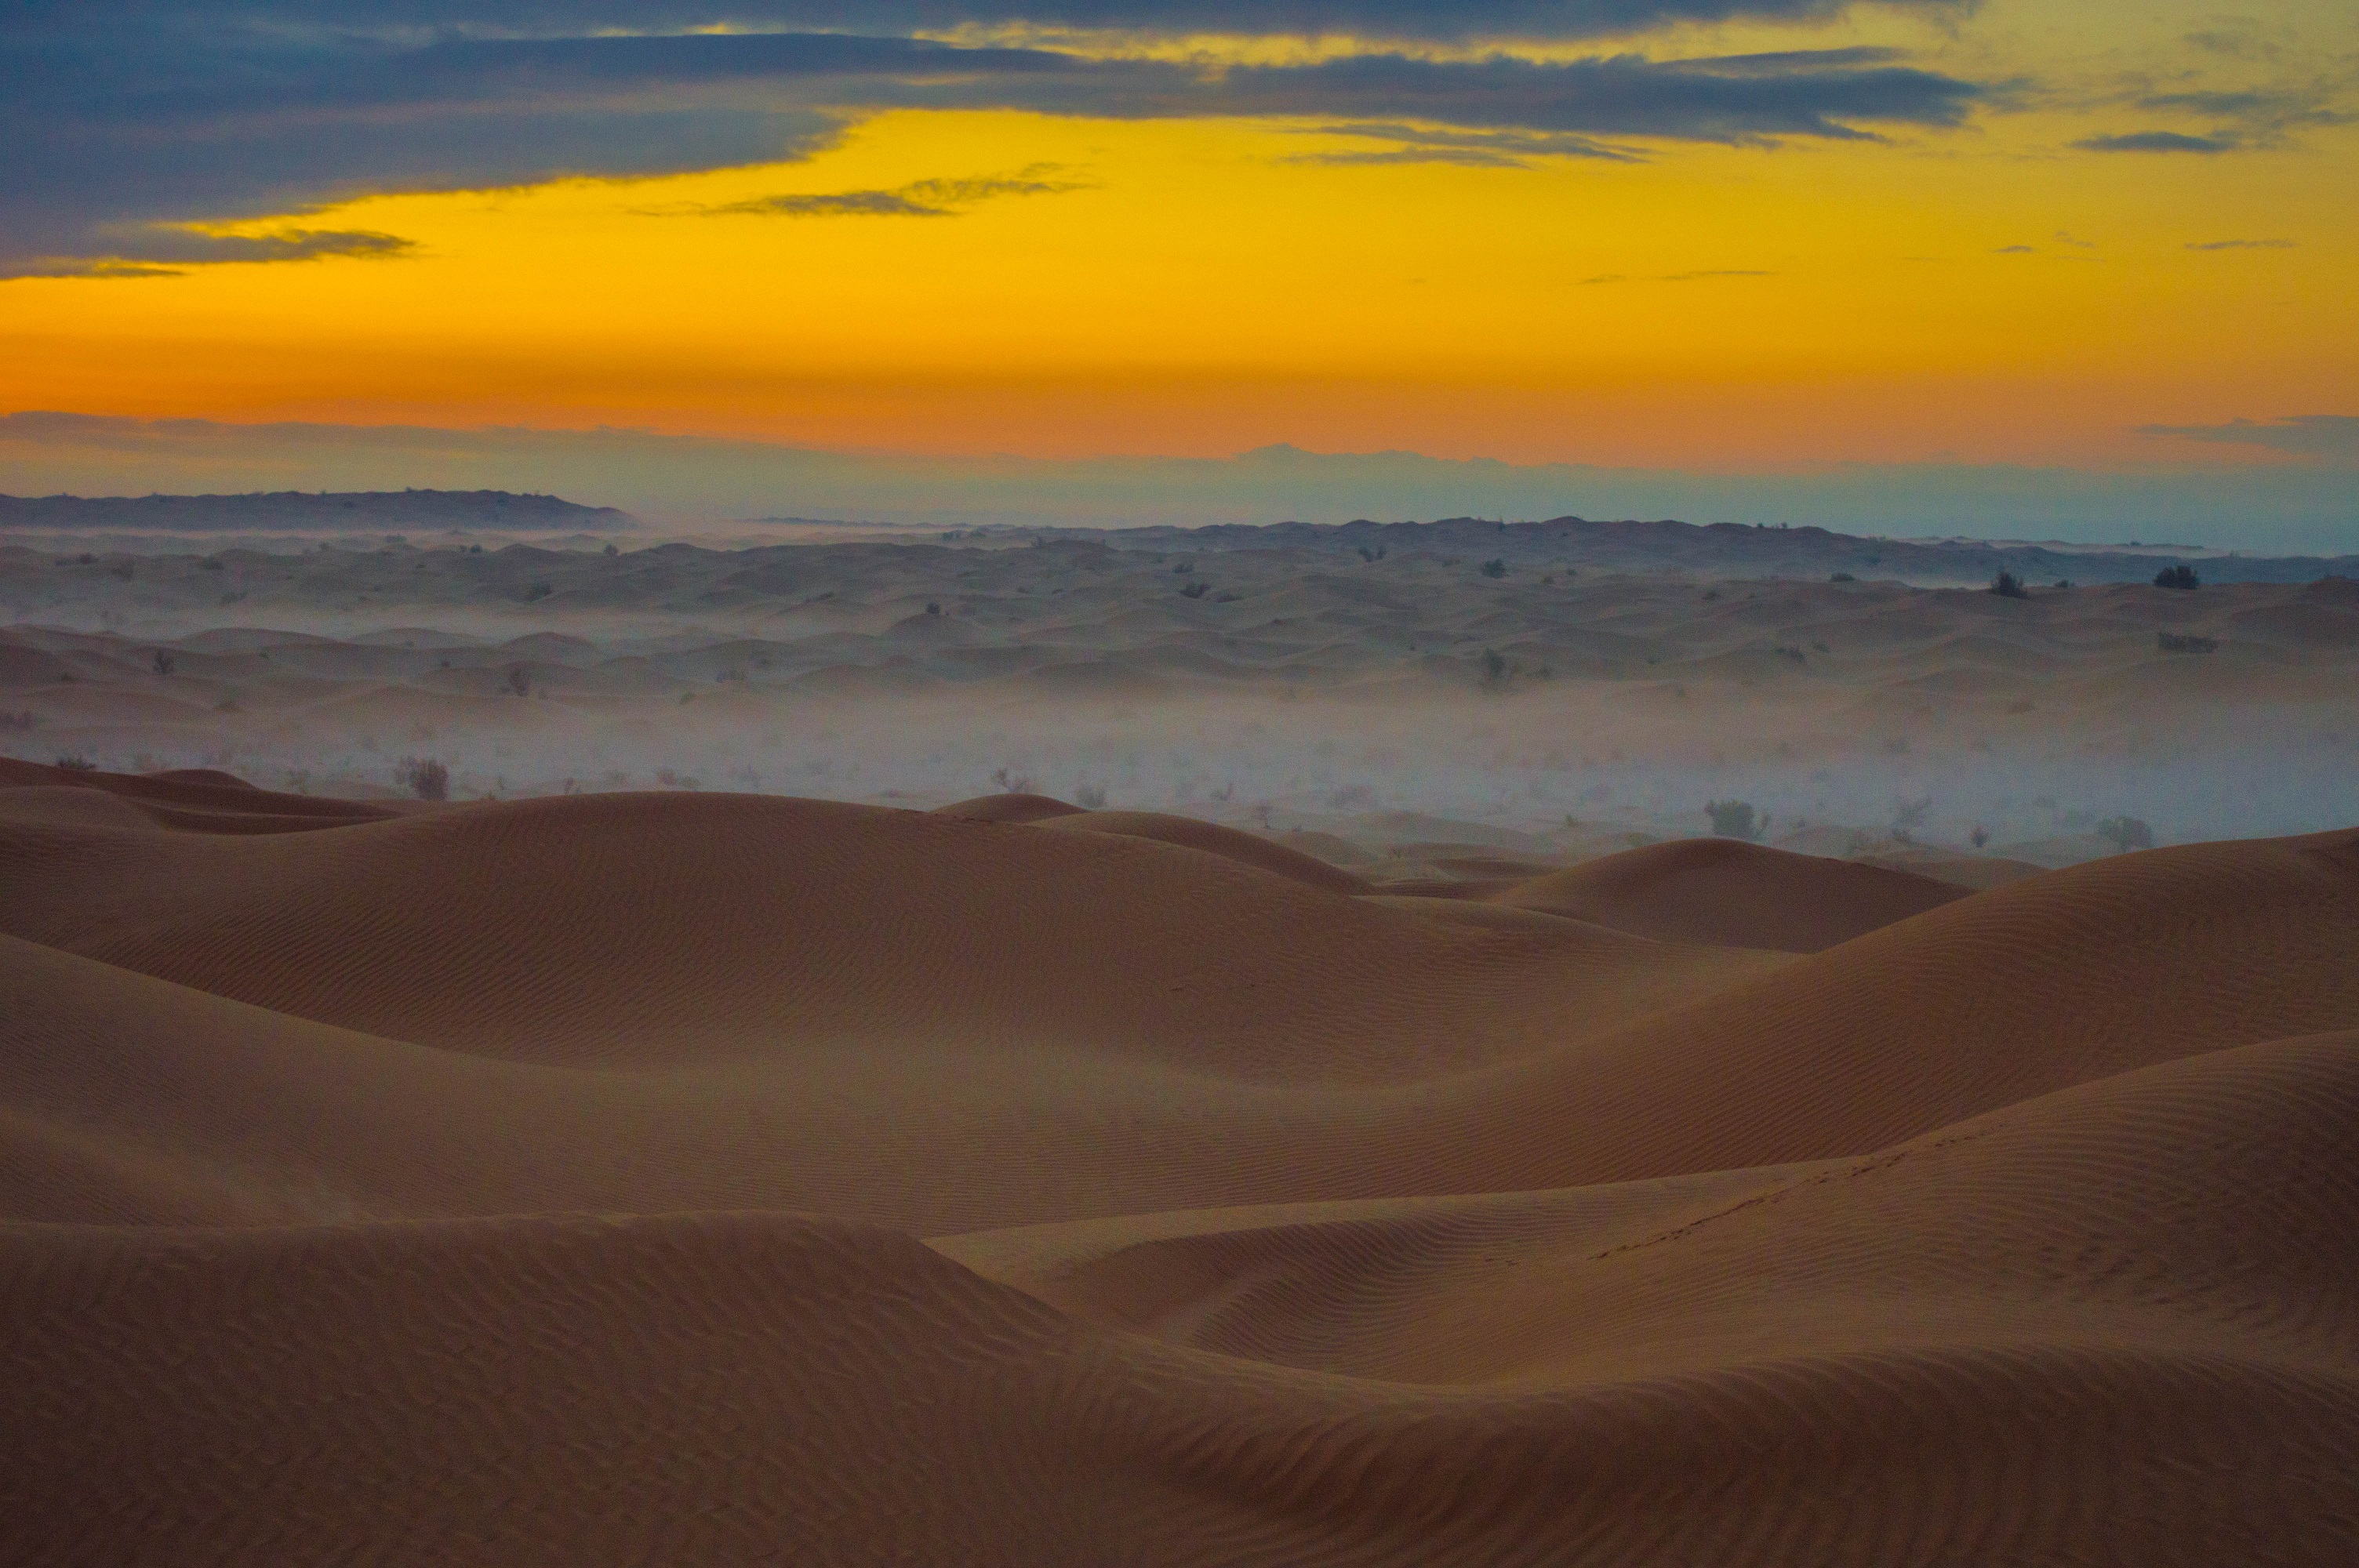 Day 04: Douz - Sahara Dunes - Chott El Jerid - Ong Jemel - Tozeur